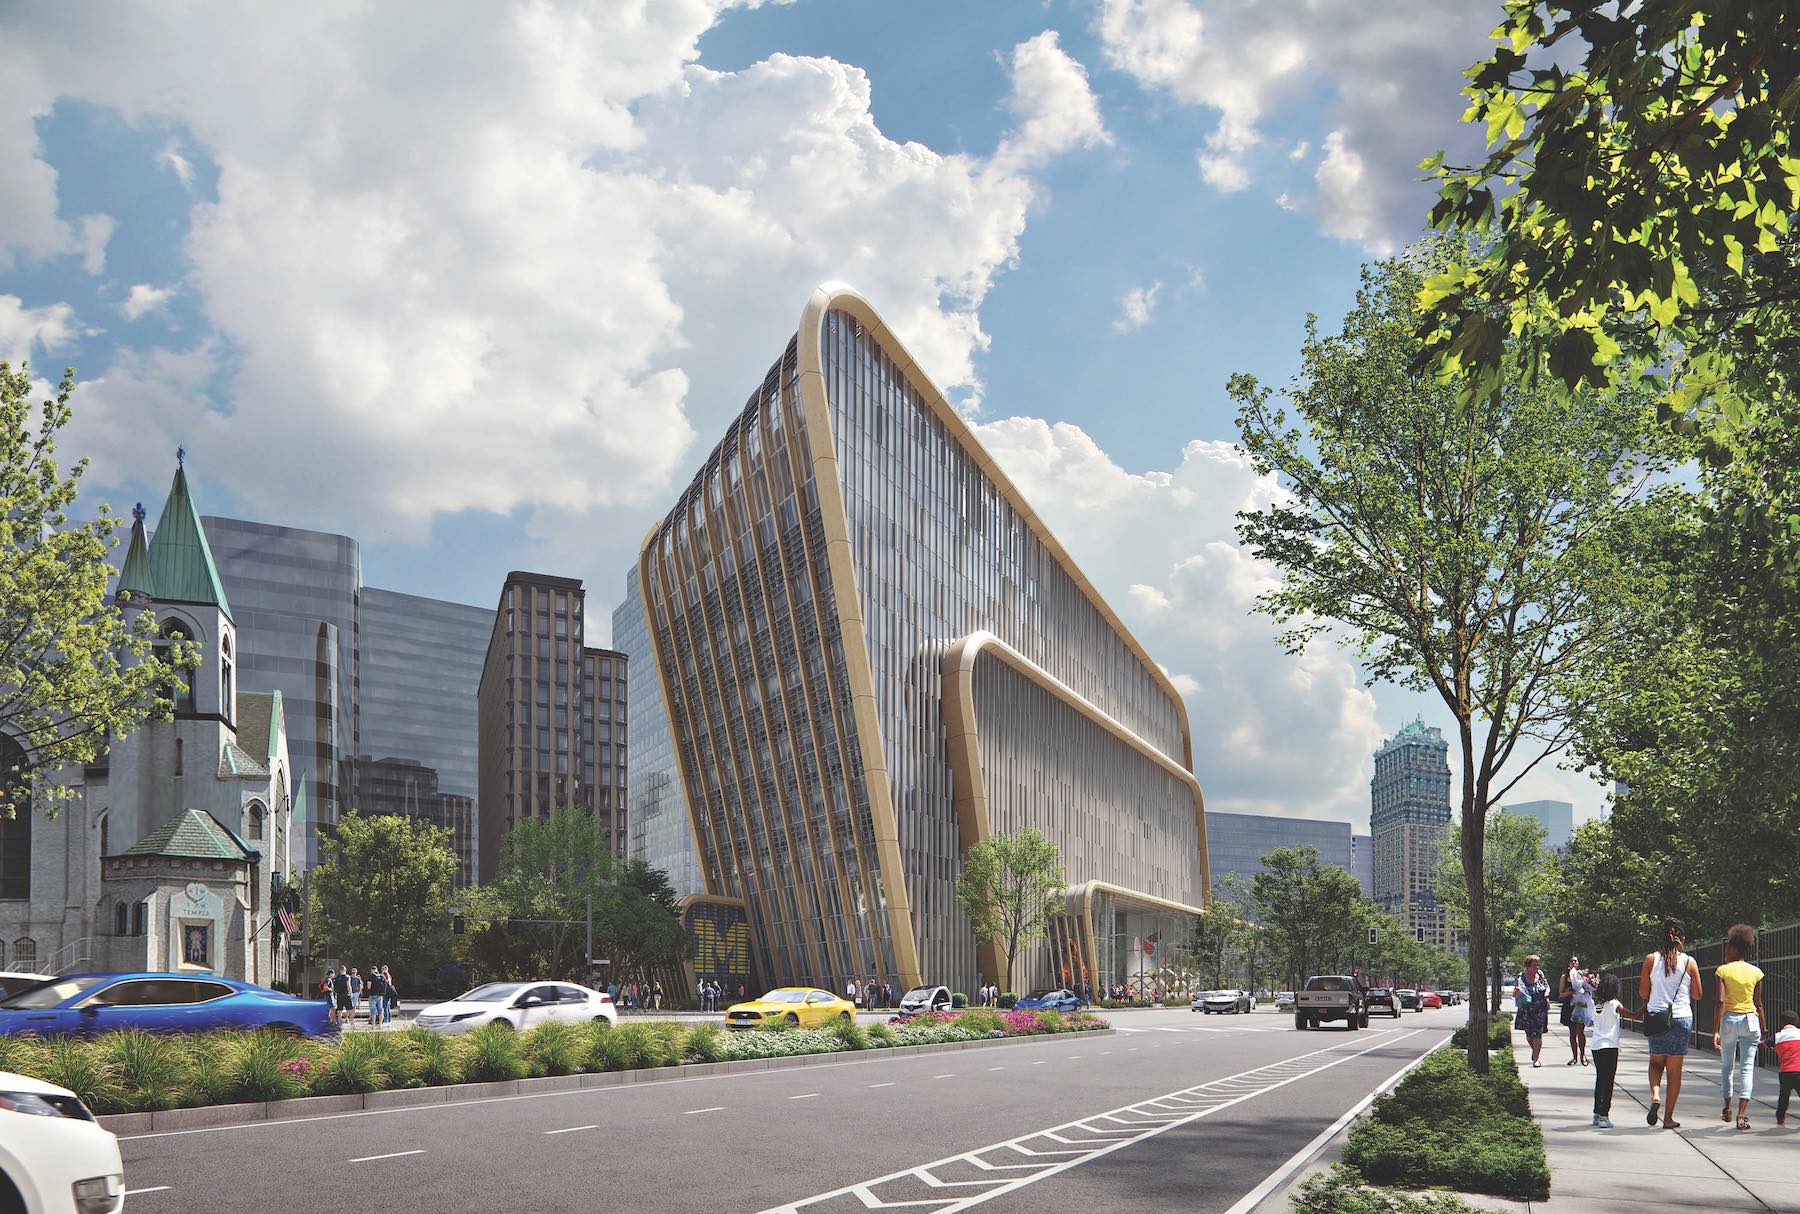 2022 University Building Design Trends, Building Design and Construction magazine Detroit Center for Innovation KPF